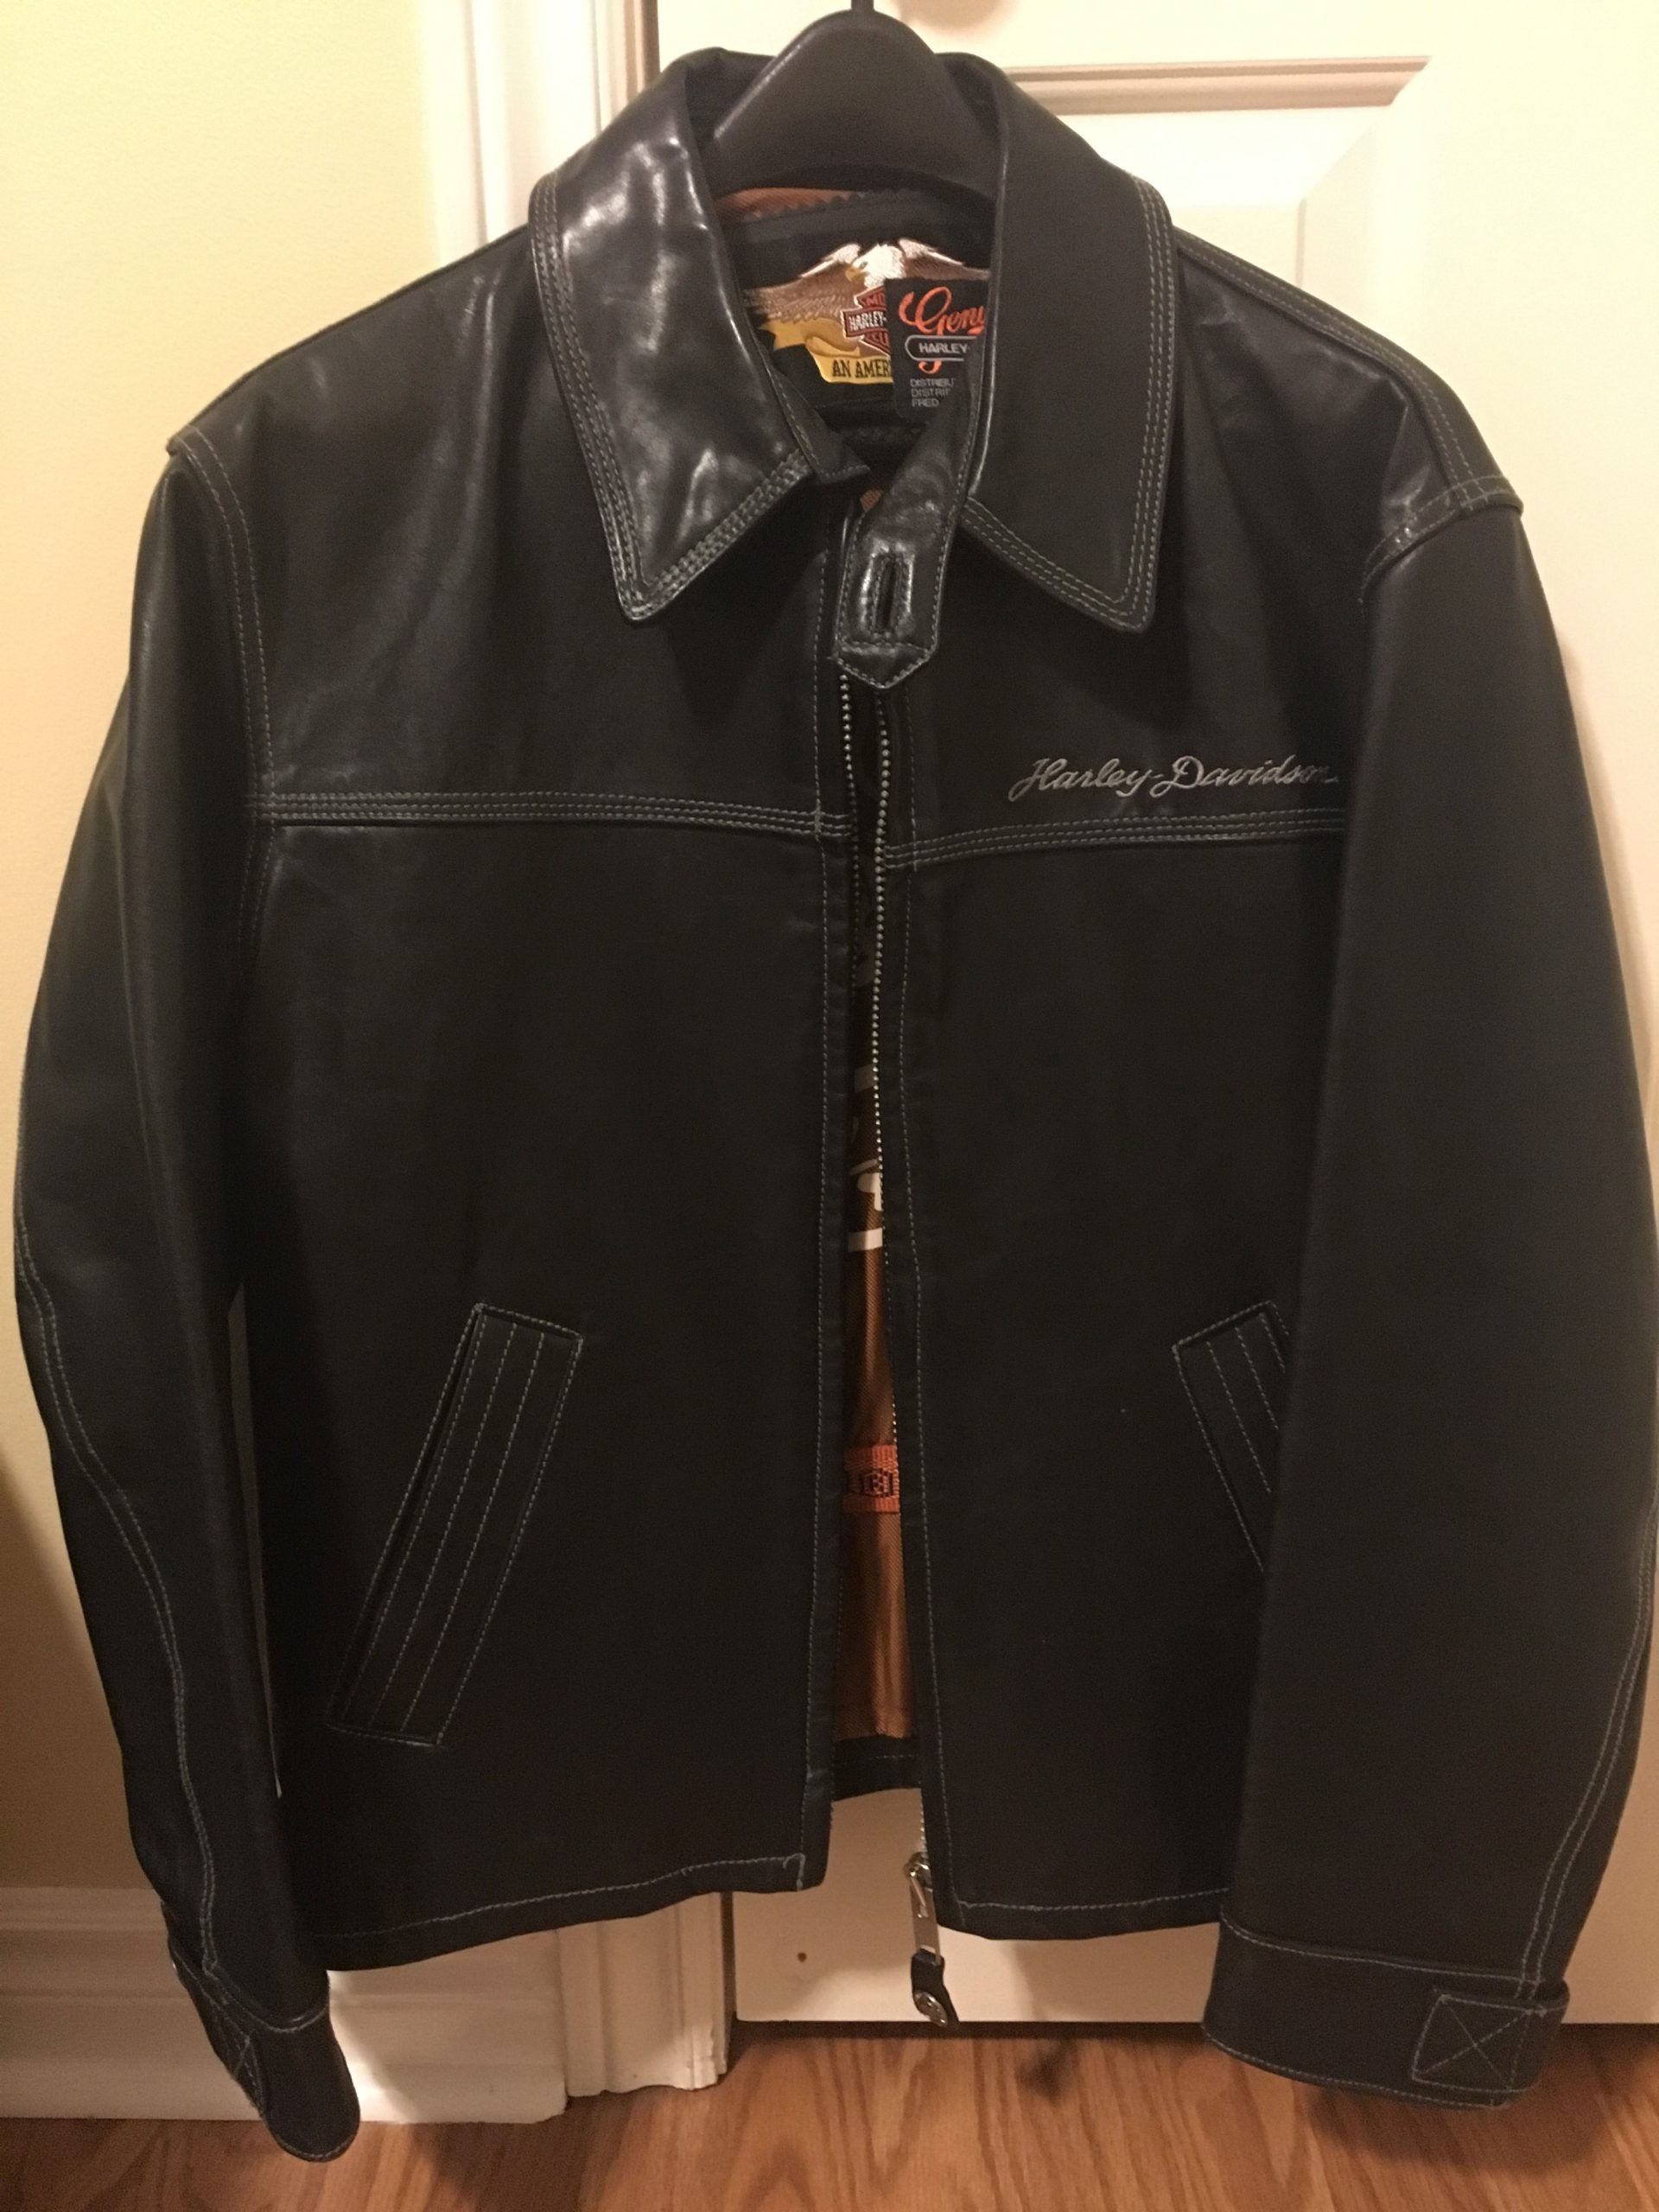 How Much Is My Harley Davidson Jacket Worth